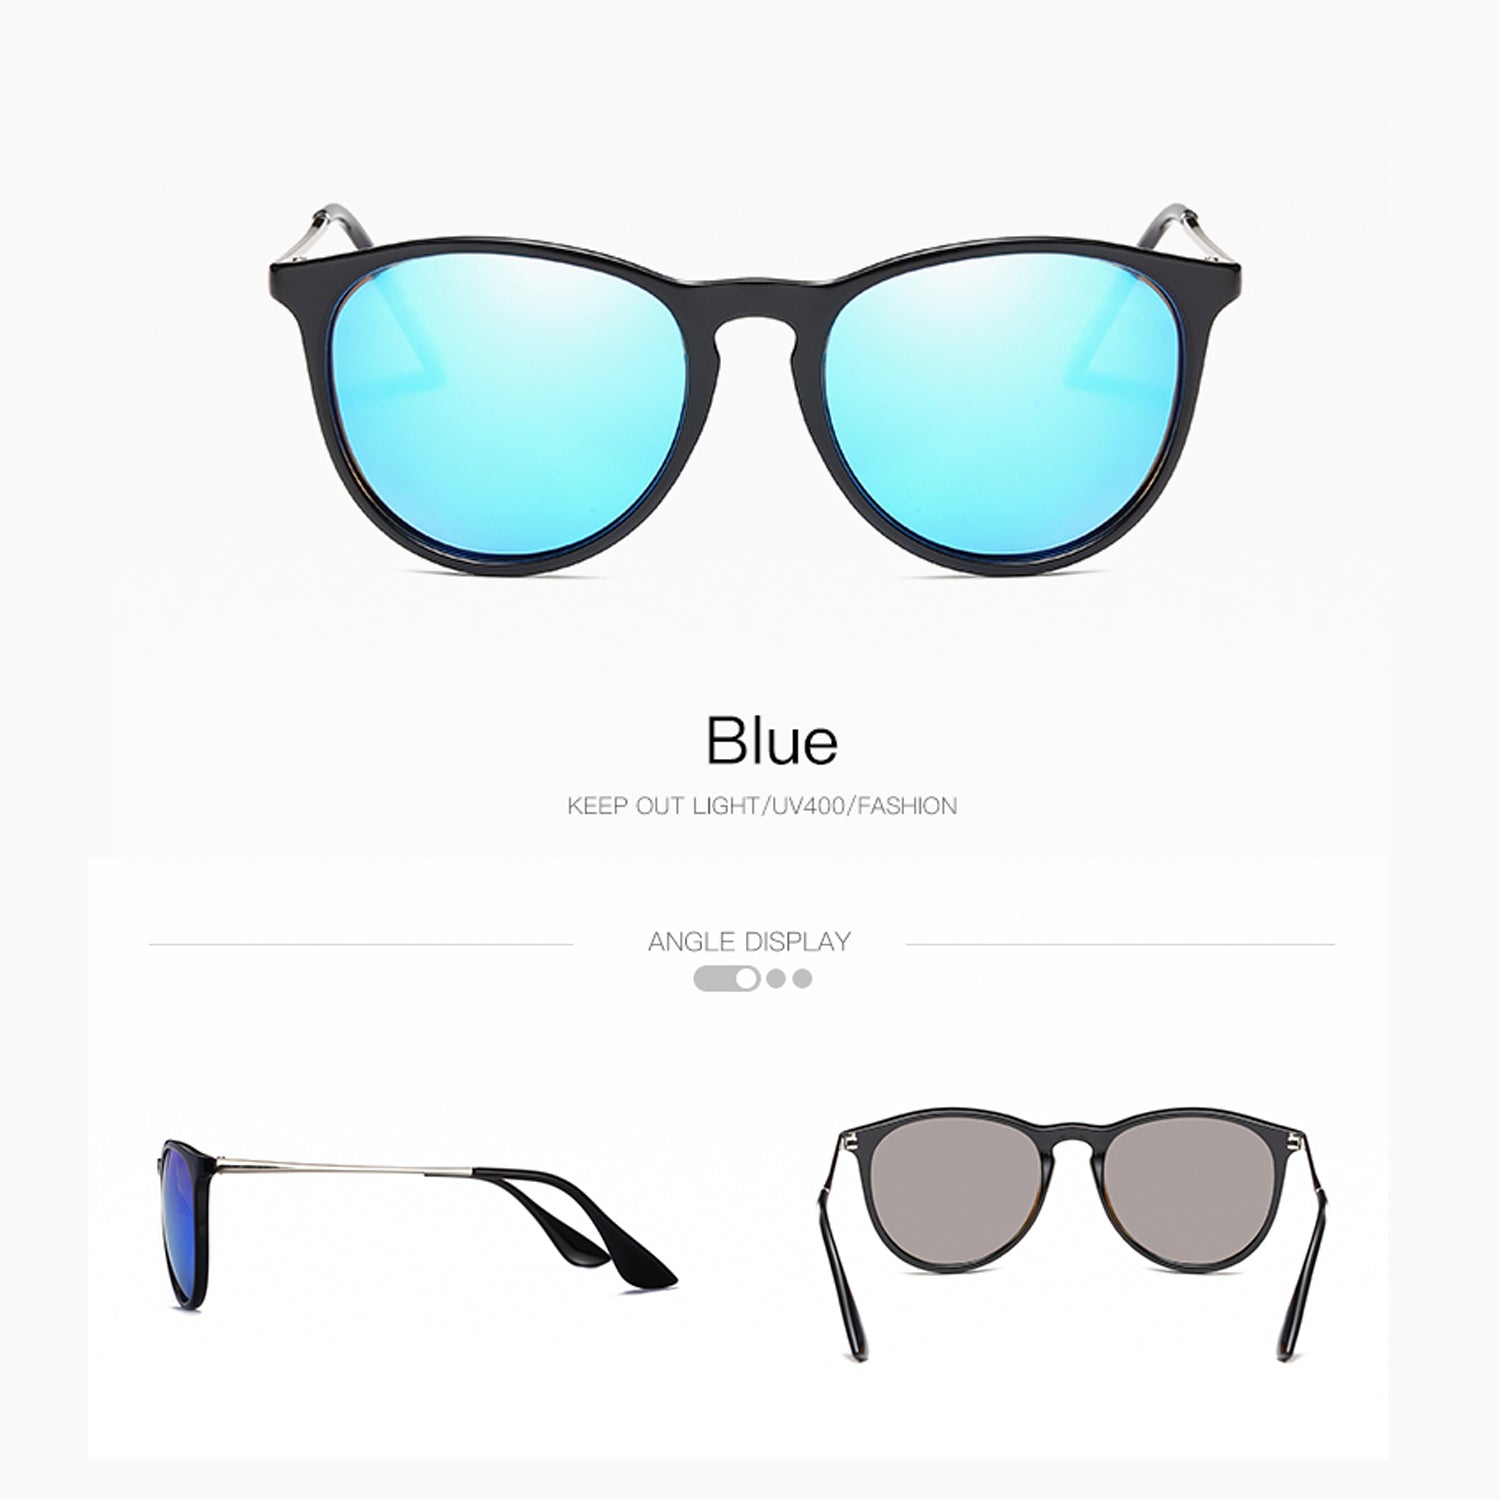 NALANDA Blue Polarized Aviator Sunglasses With UV400 Mirrored Lens Metal PC Frame, Men Women Glasses For Outdoor Travel Driving Daily Use Etc